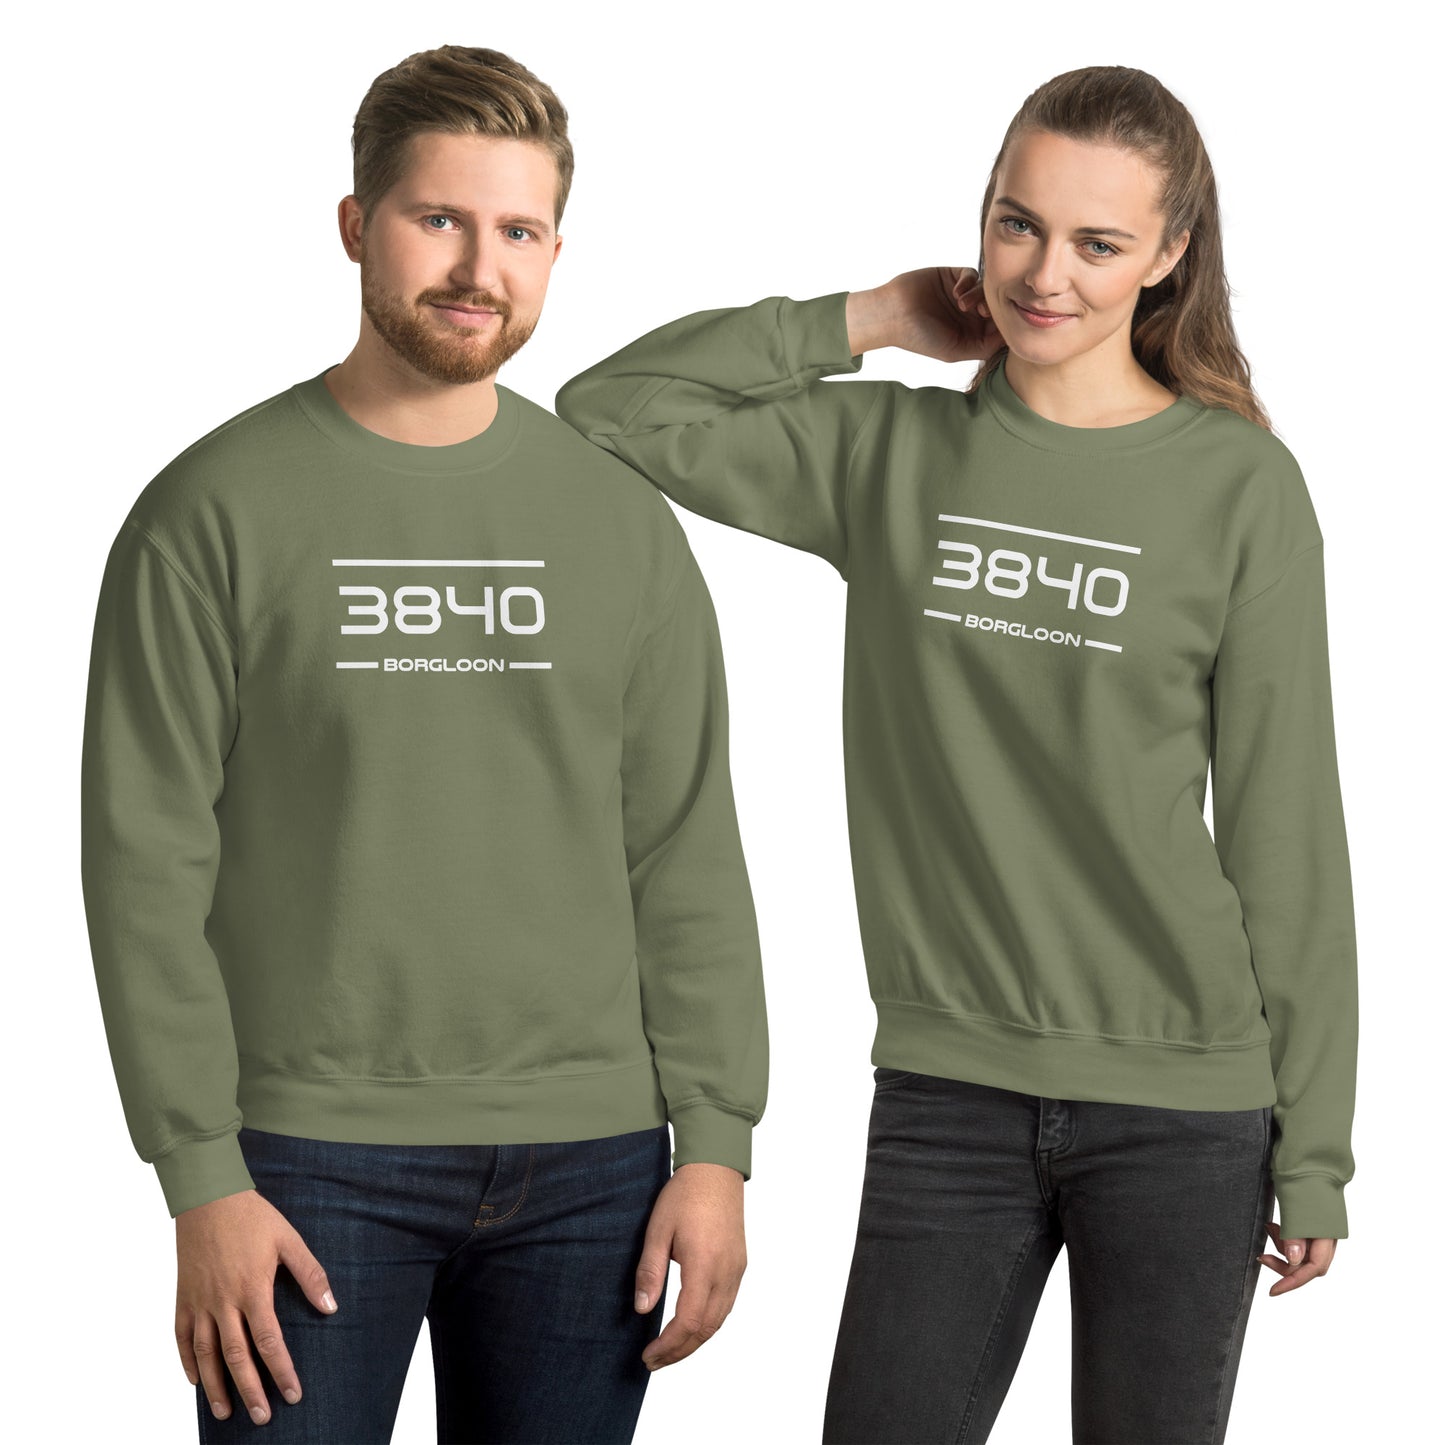 Sweater - 3840 - Borgloon (M/V)